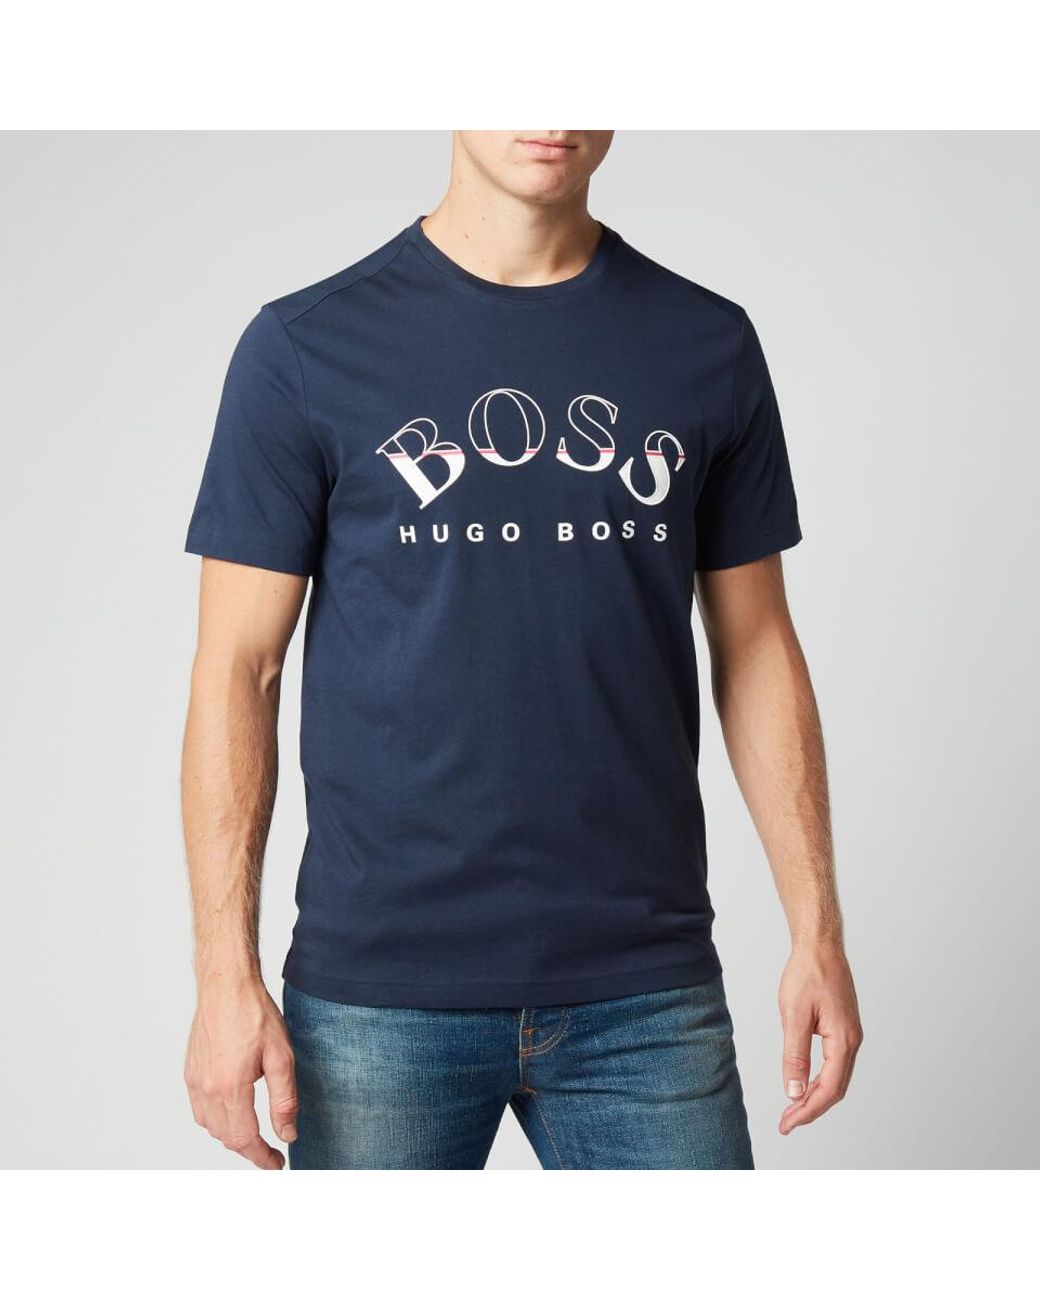 BOSS by Hugo Boss Cotton Tee 1 T-shirt in Blue for Men - Lyst